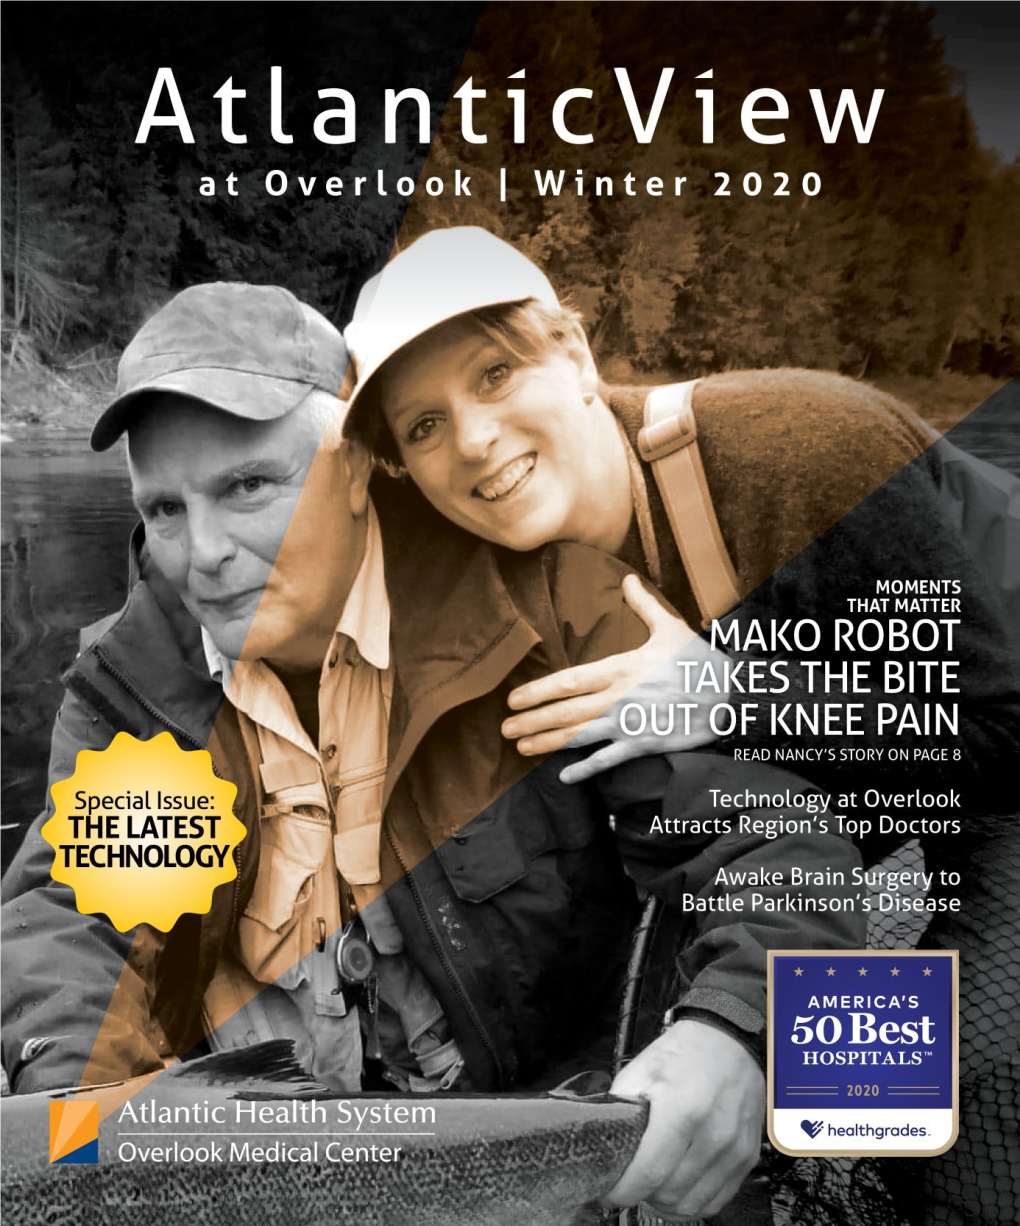 Atlanticview at Overlook